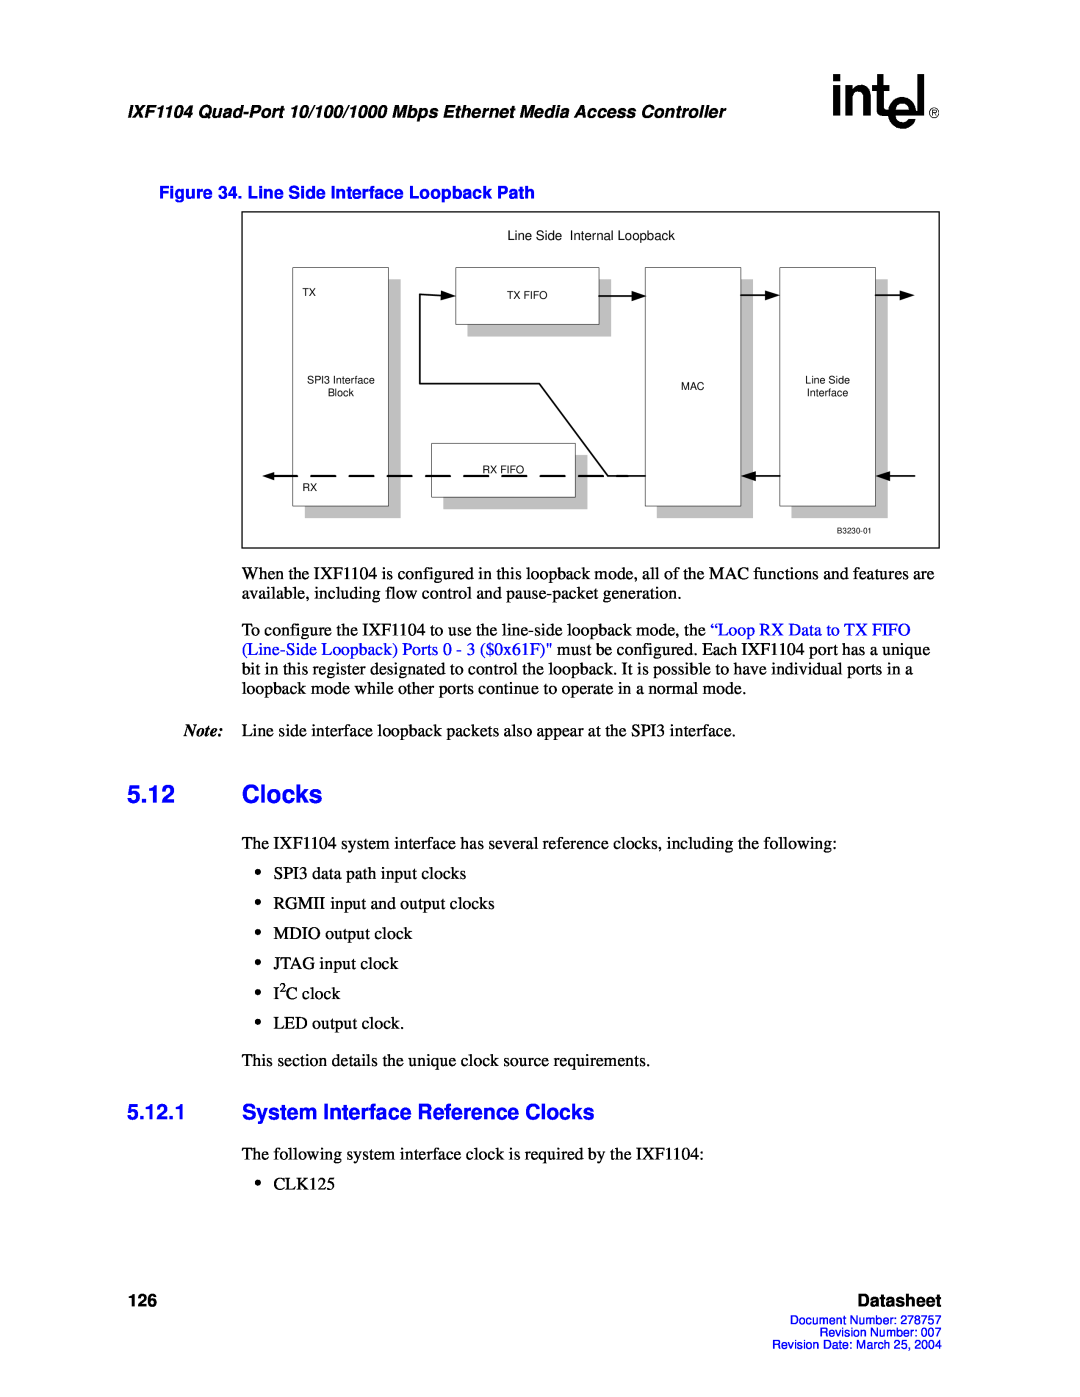 Intel IXF1104 manual 5.12Clocks, 5.12.1System Interface Reference Clocks, Datasheet 